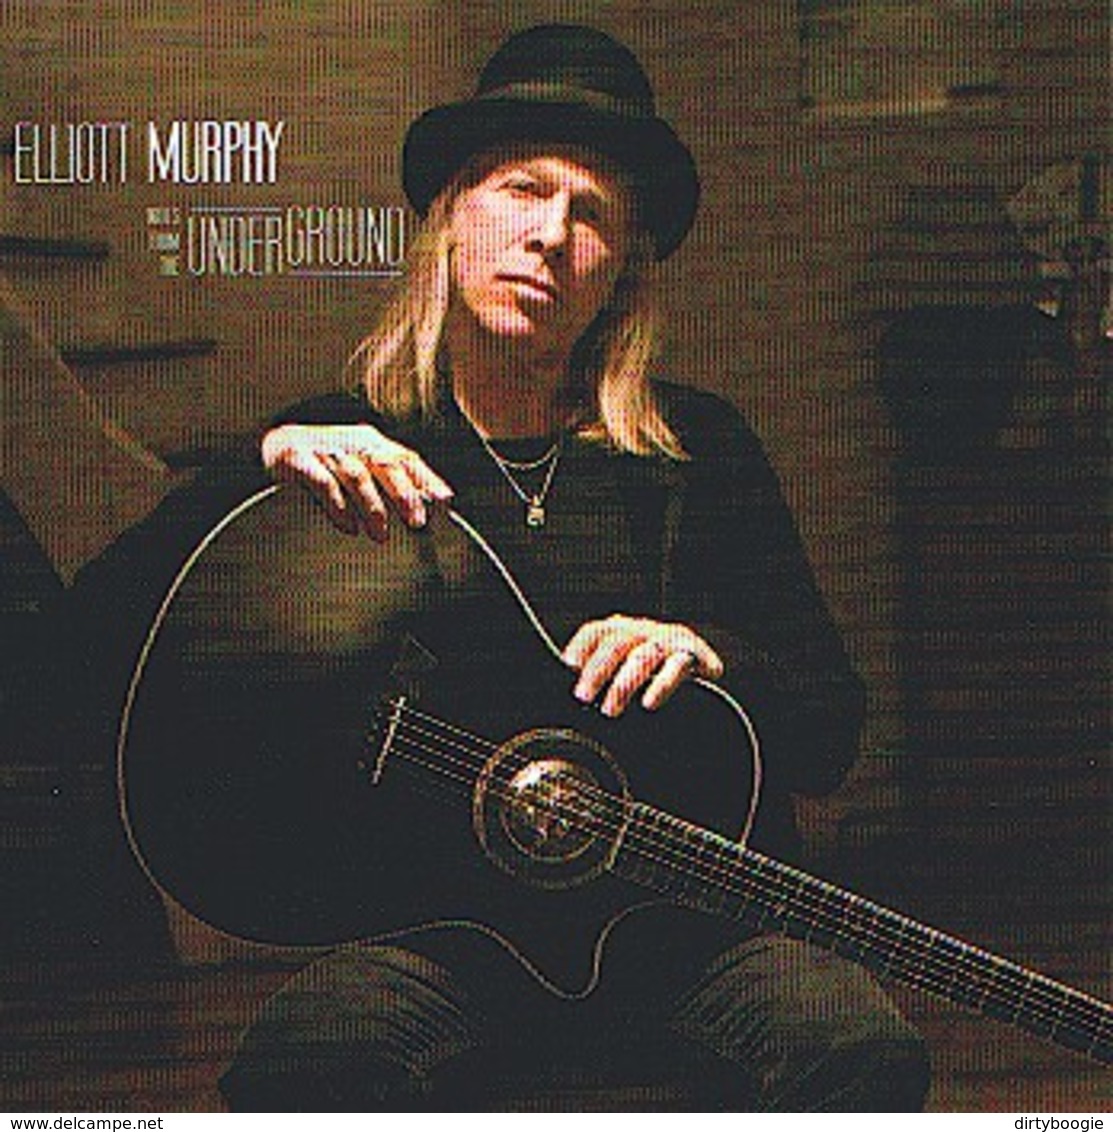 Elliott MURPHY - Notes From The Underground - CD - Rock